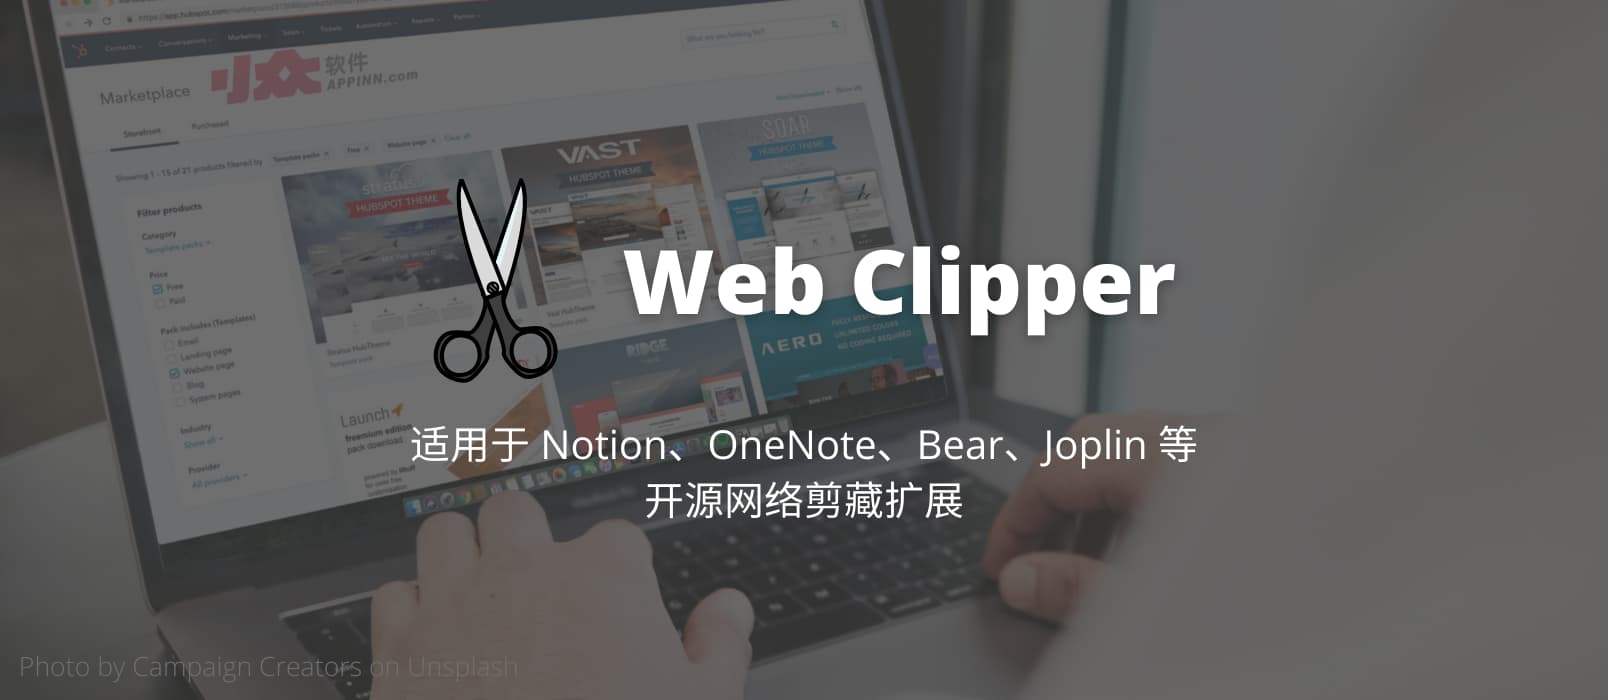 Web Clipper - 适用于 Notion、OneNote、Bear、Joplin 等笔记的开源网络剪藏扩展[Chrome/Firefox]